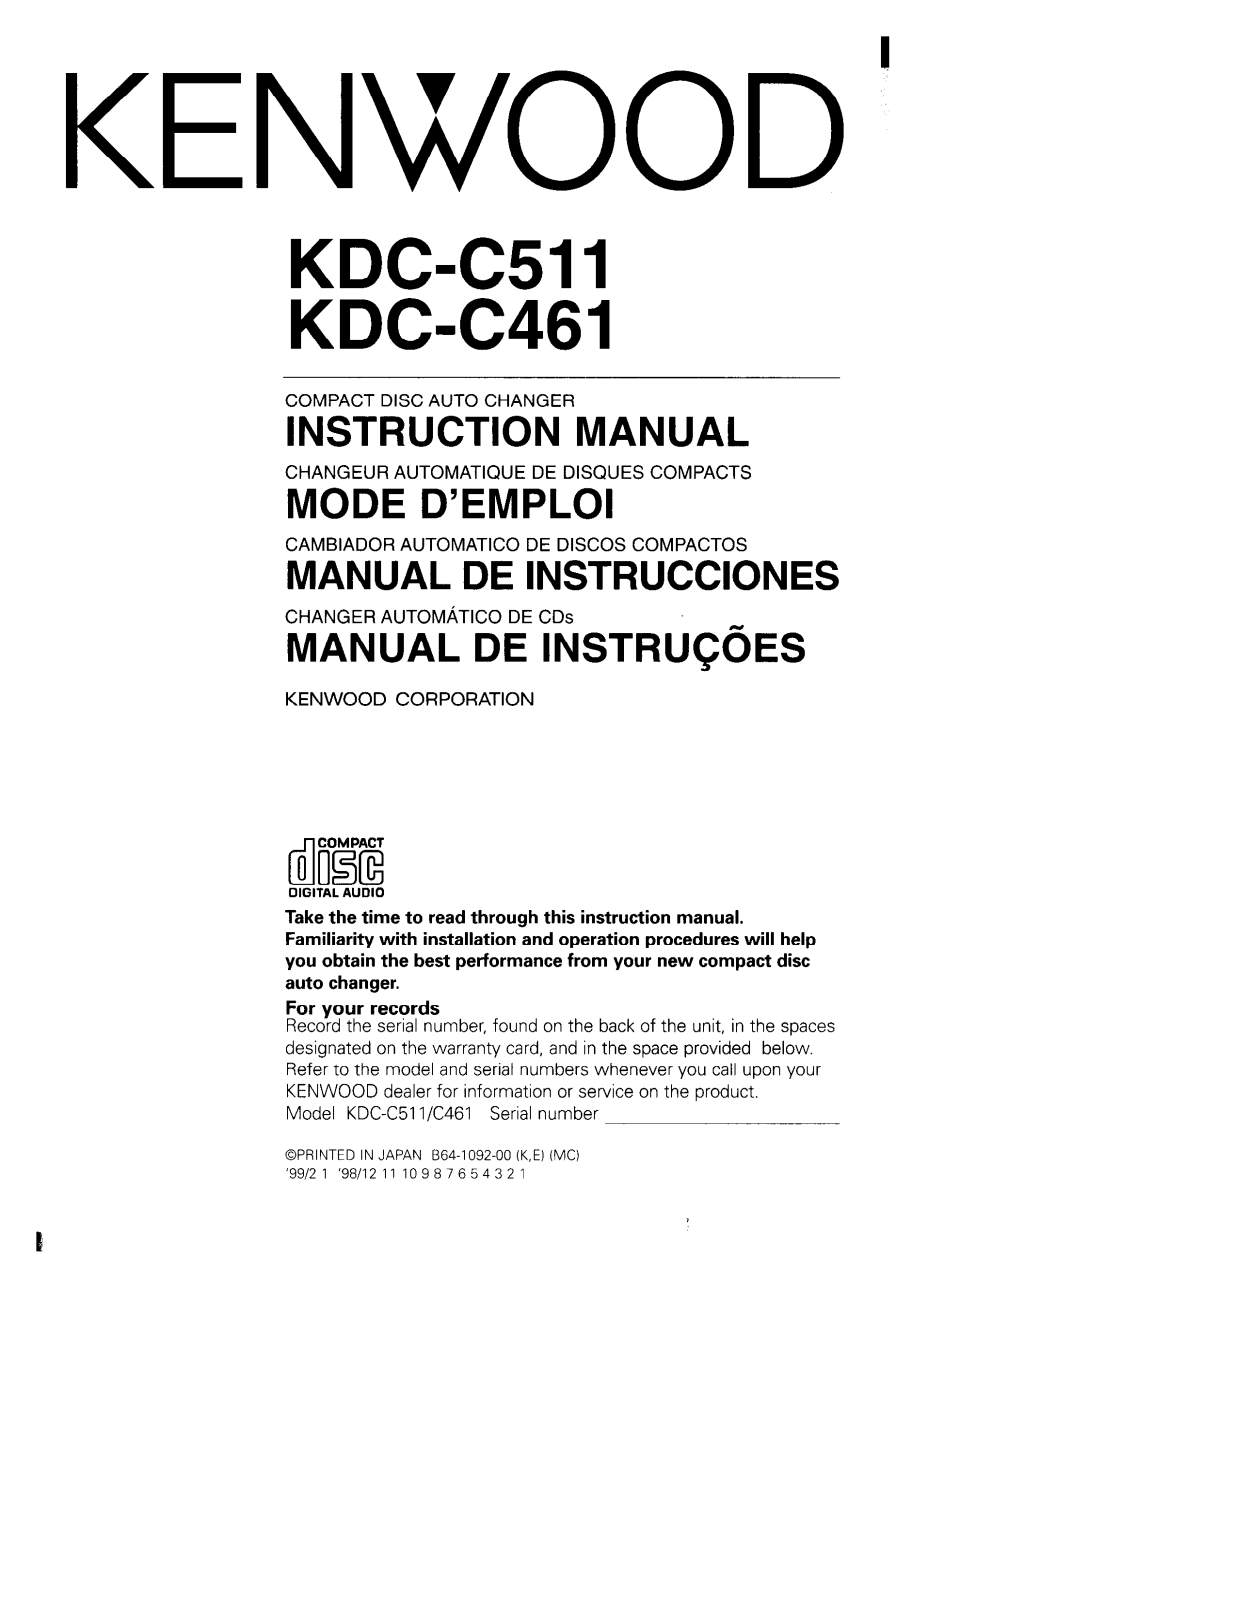 Kenwood KDC-C511, KDC-C461 Owner's Manual